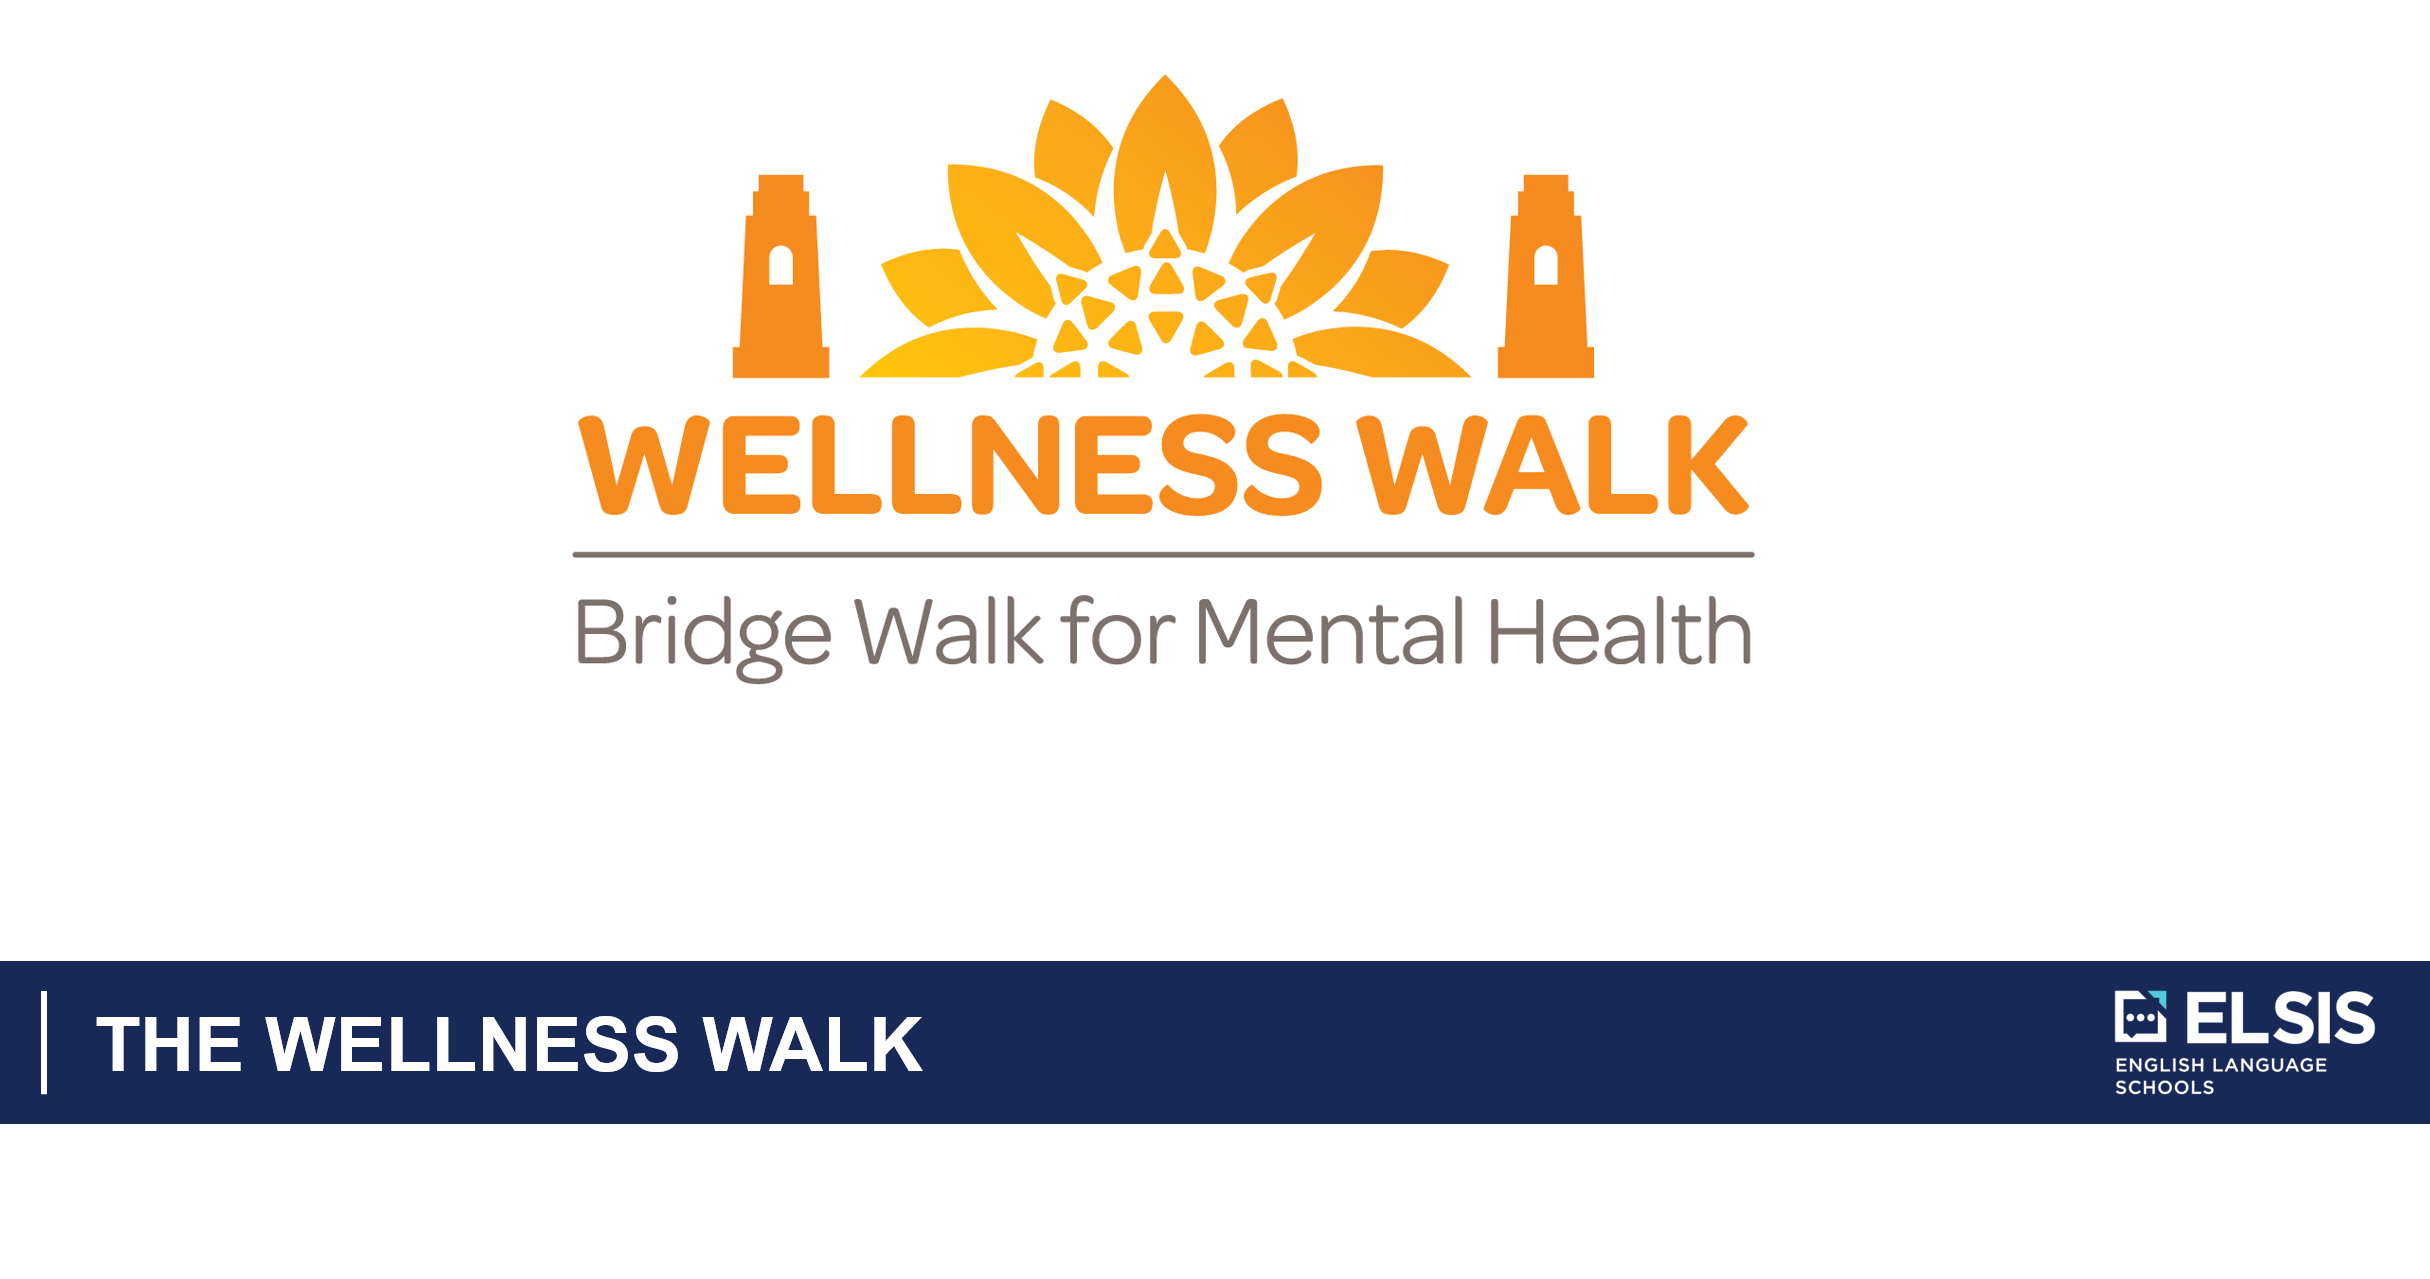 The Wellness walk